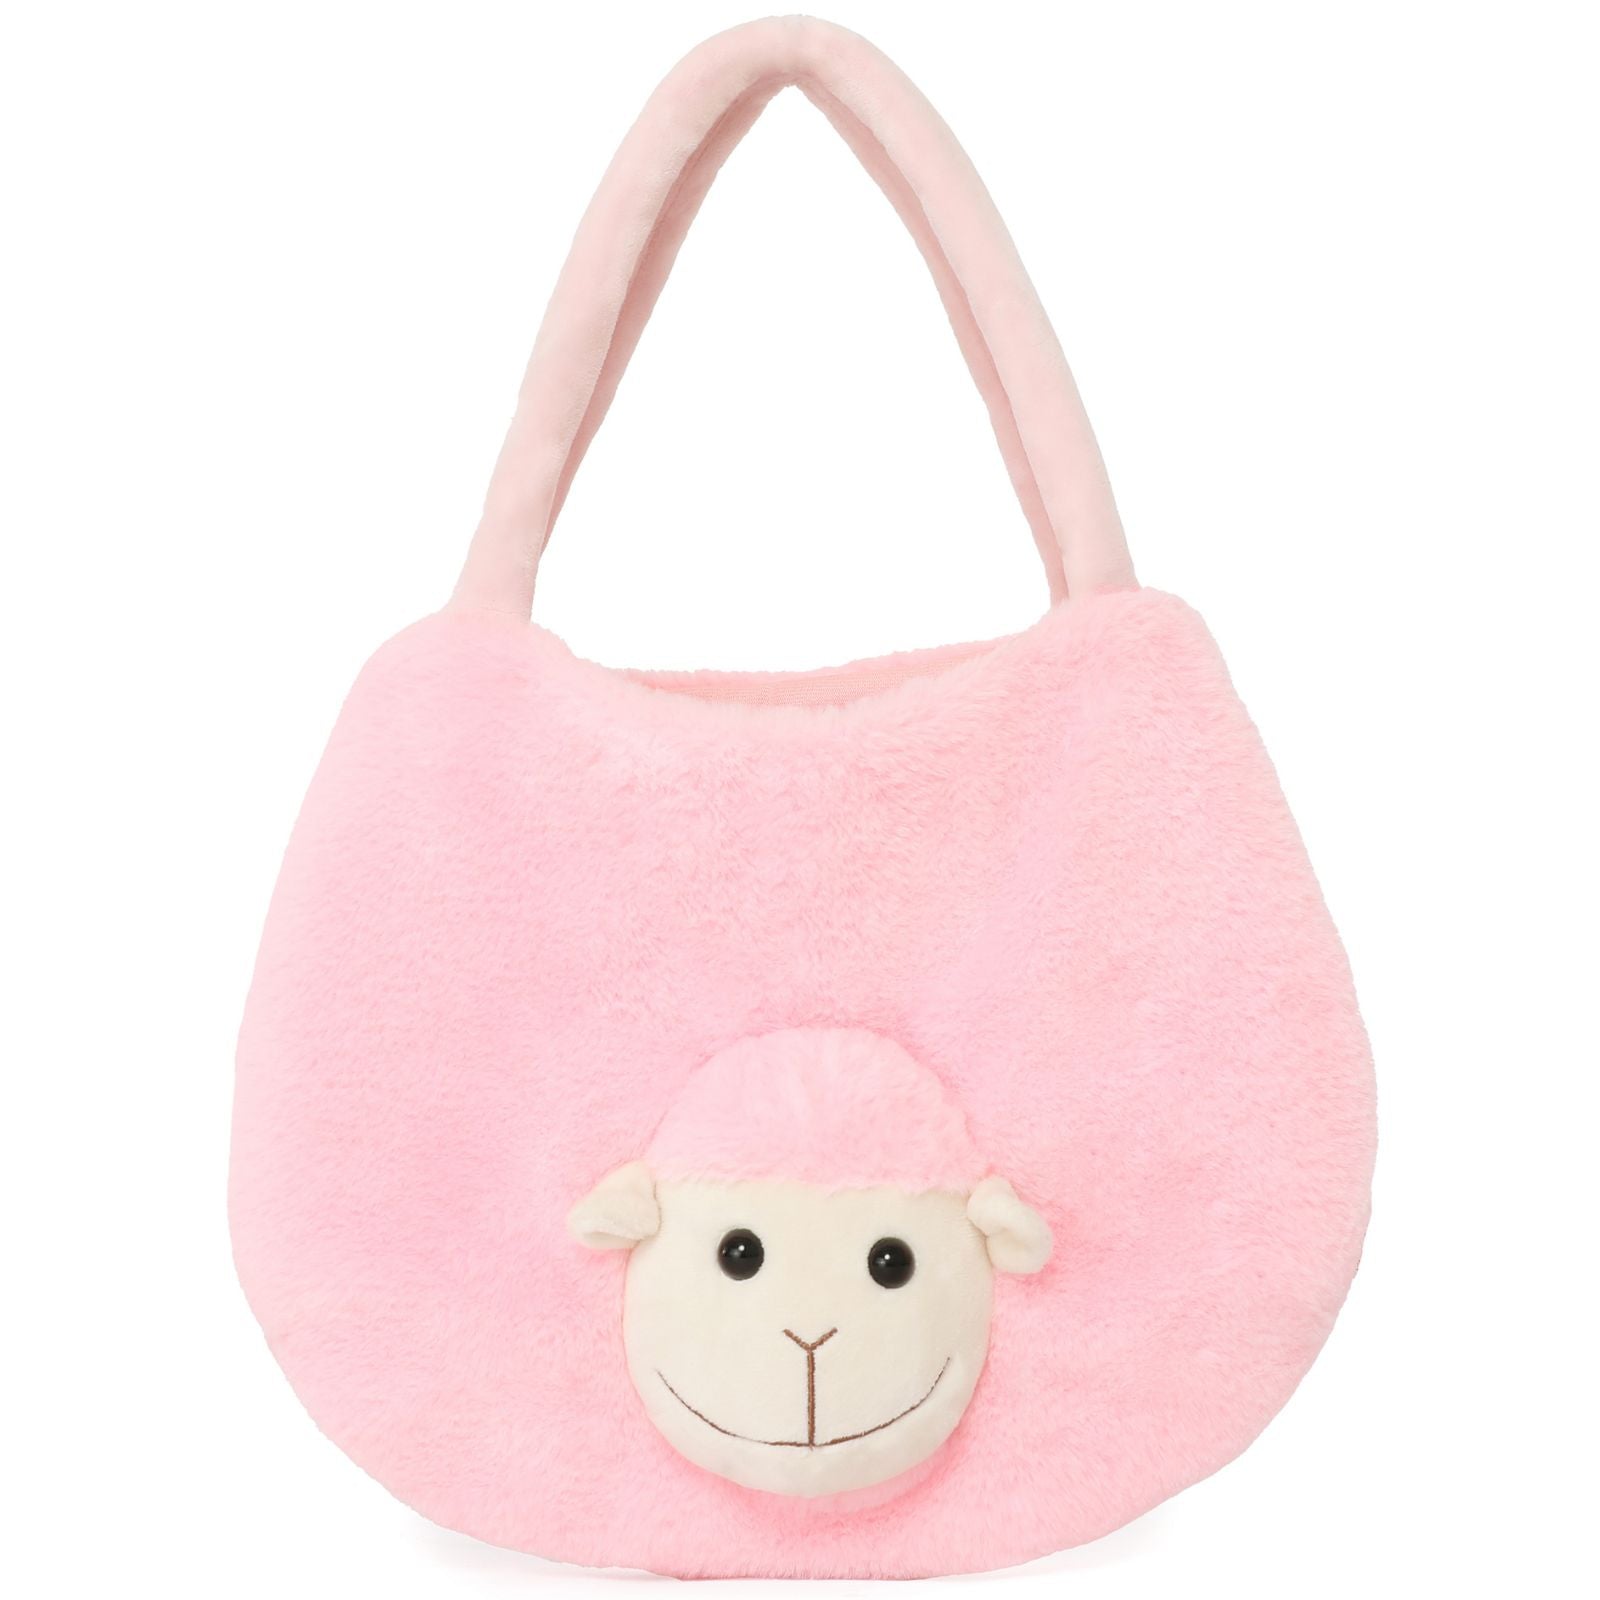 Alpaca Handbag with an Alpaca Plush Toy, Pink, 11.8 Inches